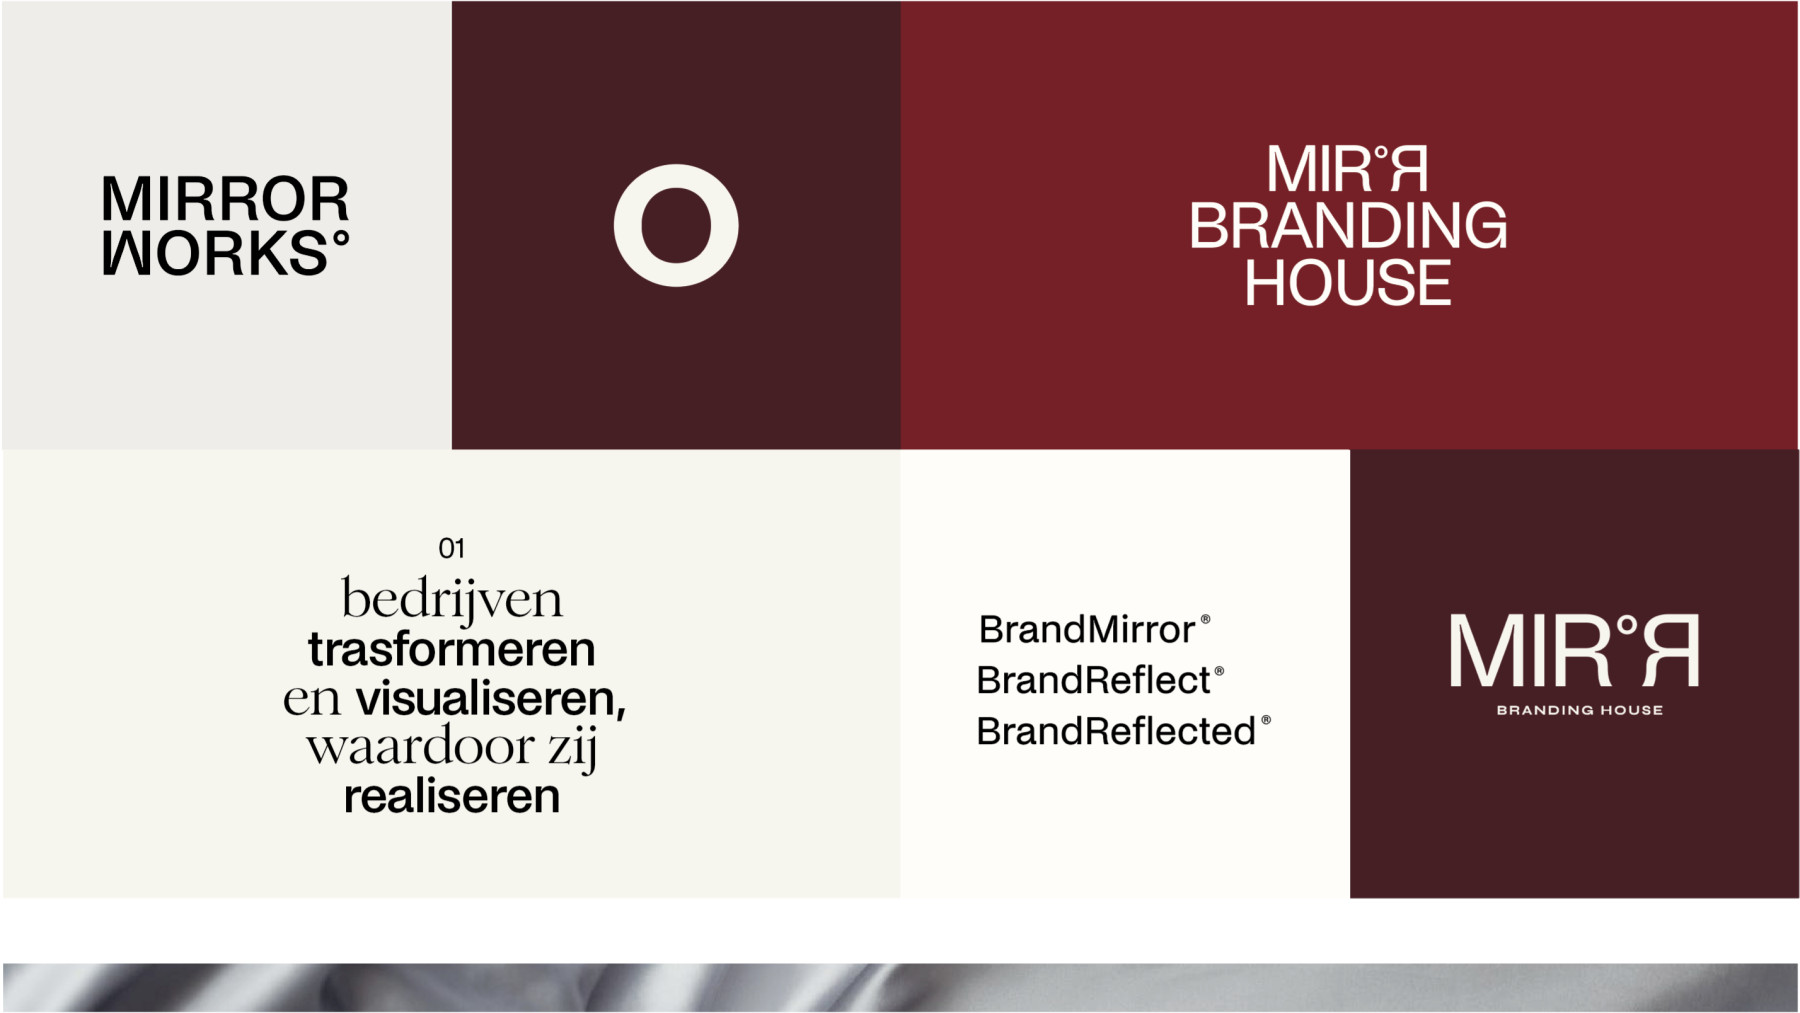 Mirr - Branding House